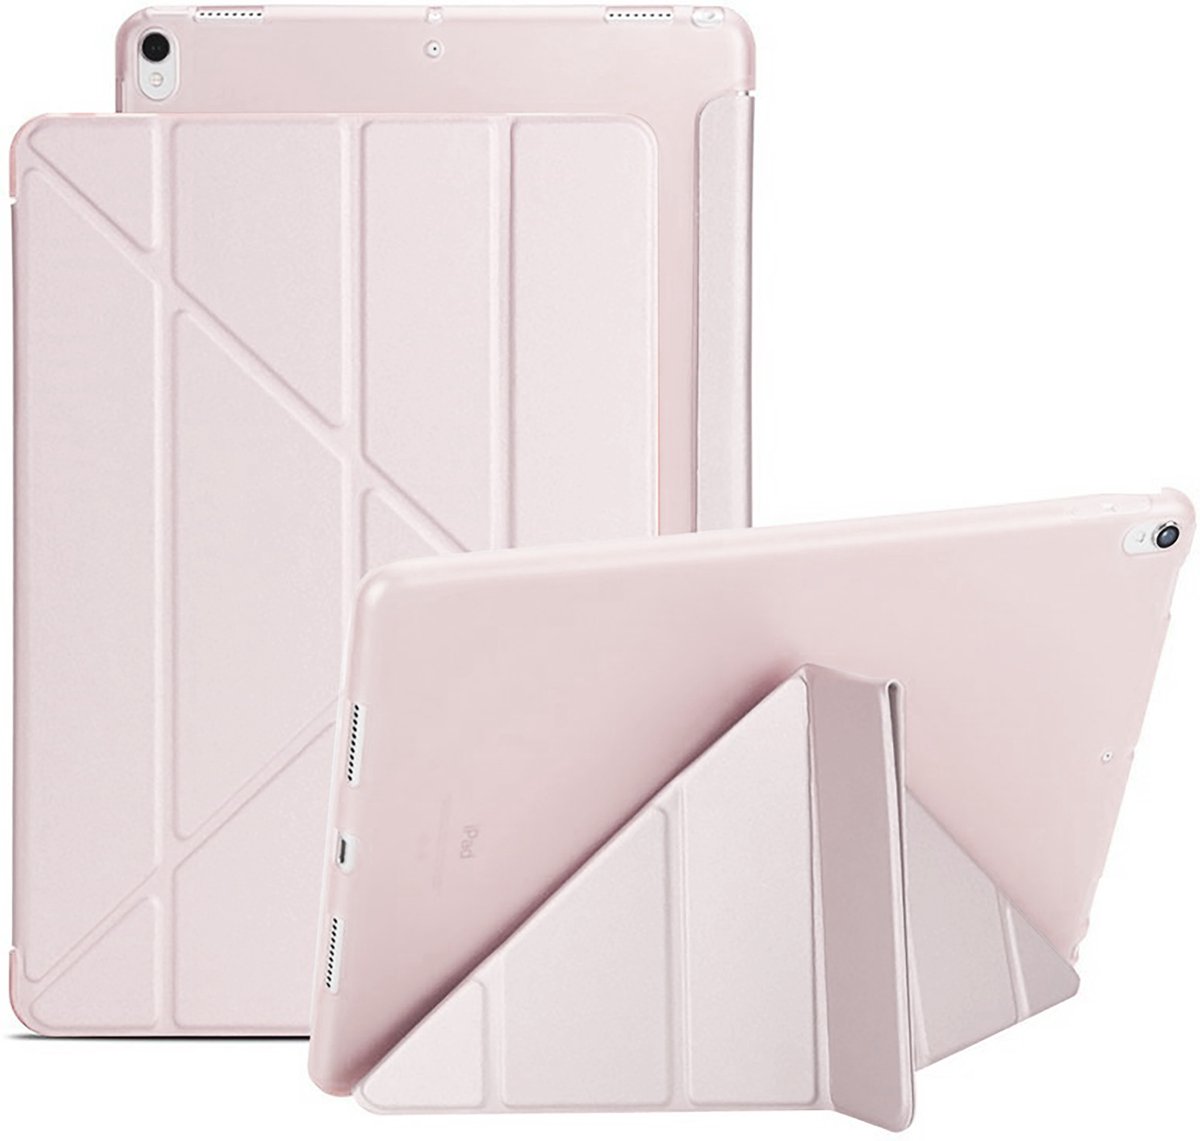 Tablet Hoes geschikt voor iPad Hoes 2019 - 7e Generatie - 10.2 inch - Smart Cover - A2200 - A2198 - A2197 - Roze